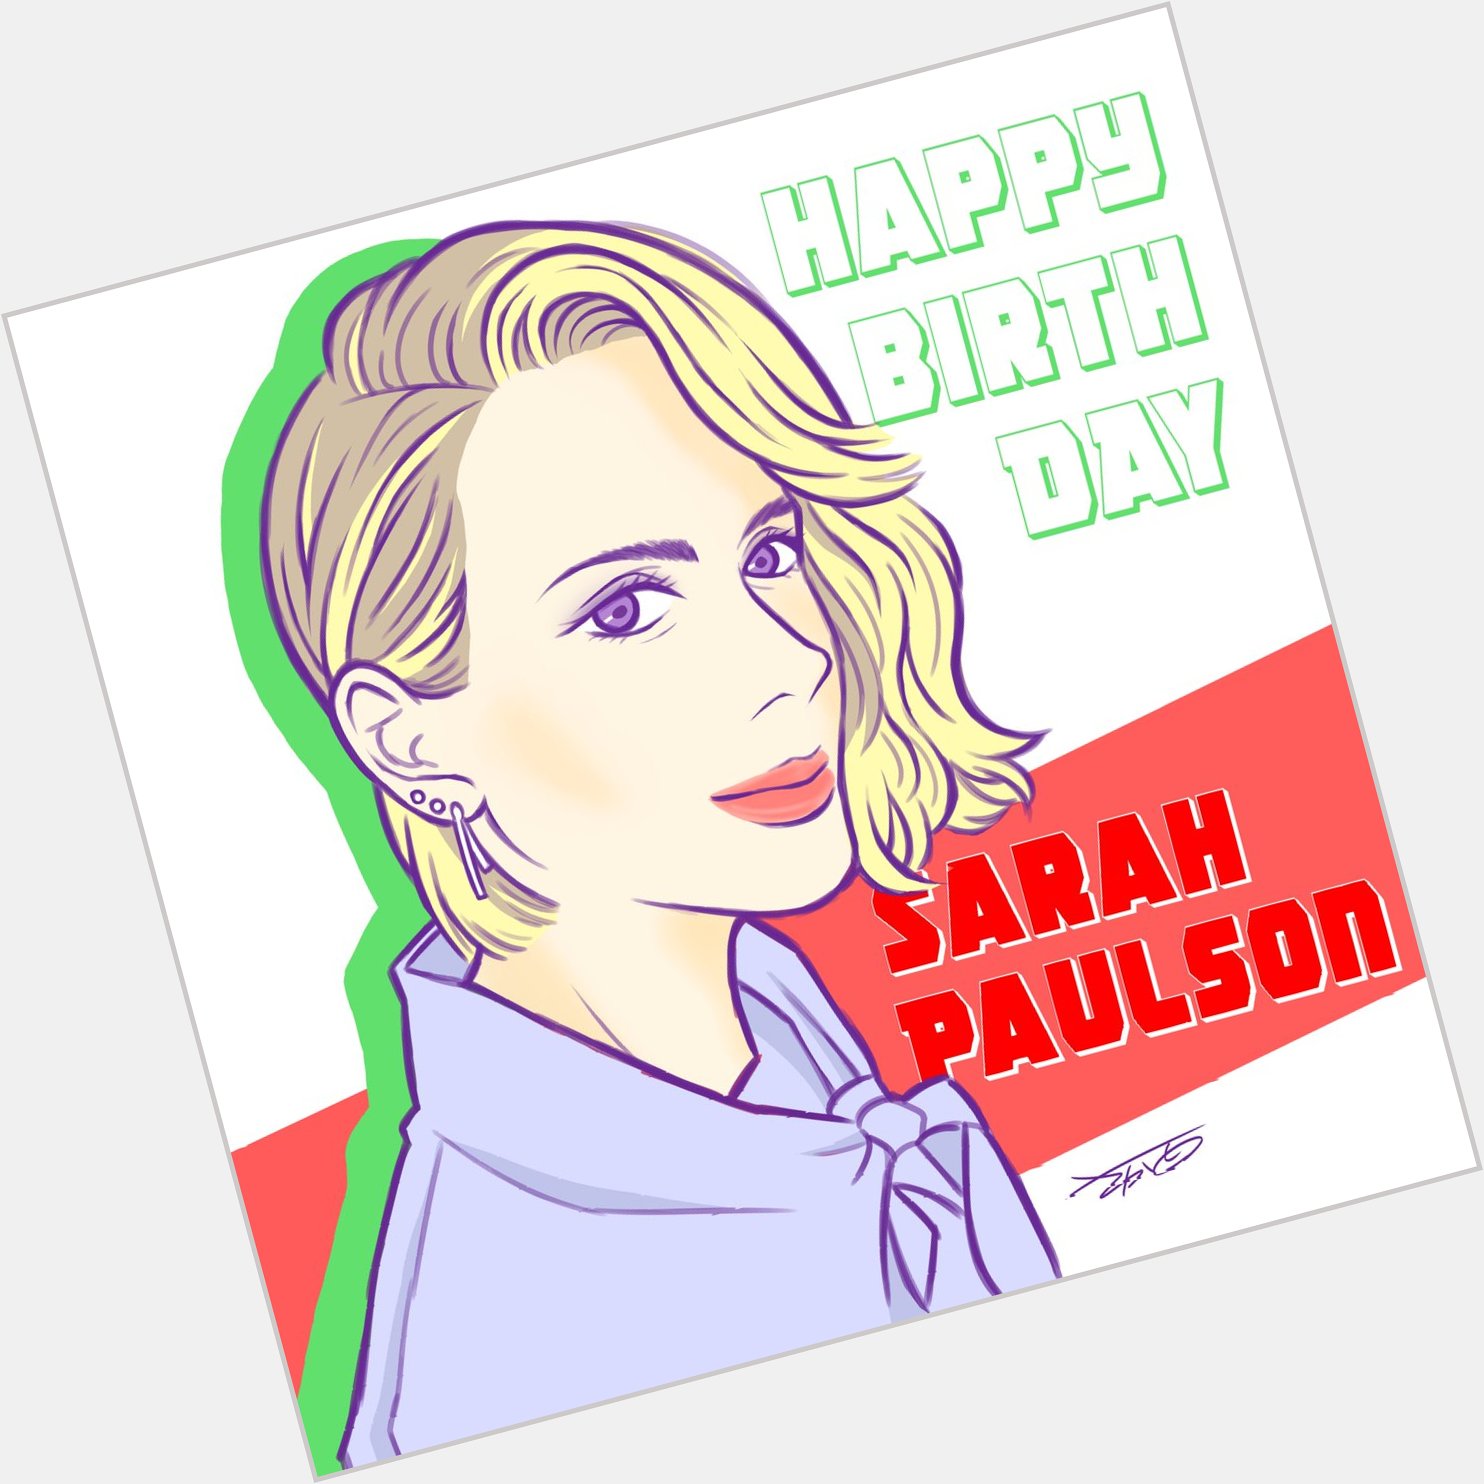 2018.12.17
Happy Birthday Sarah Paulson         